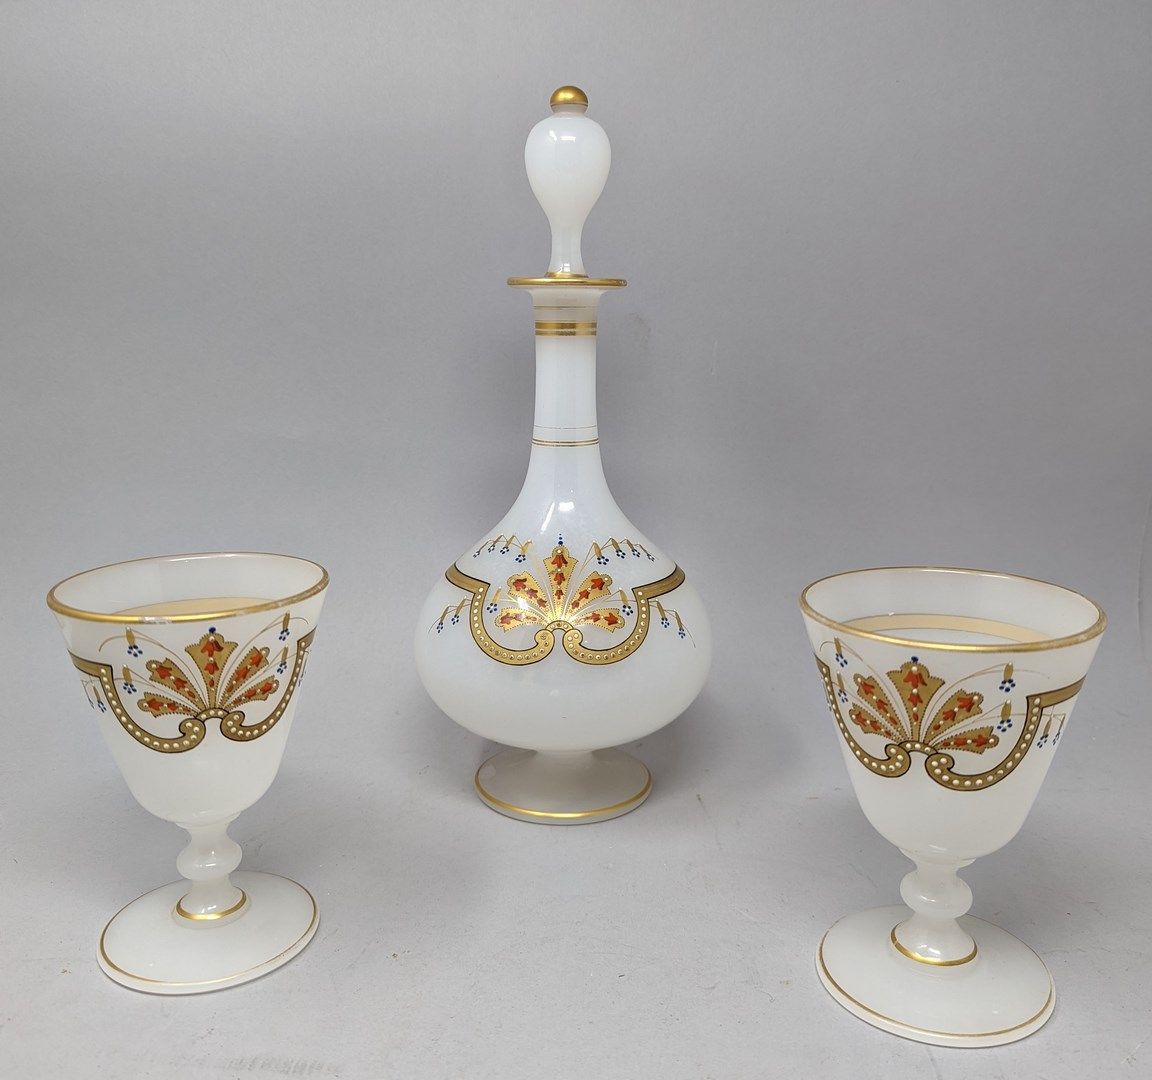 Null 一个基座上的利口酒瓶和两个乳白色玻璃的有柄酒杯，上面有镀金和部分珐琅的棕榈。19世纪晚期。

咖啡壶的高度：30厘米。